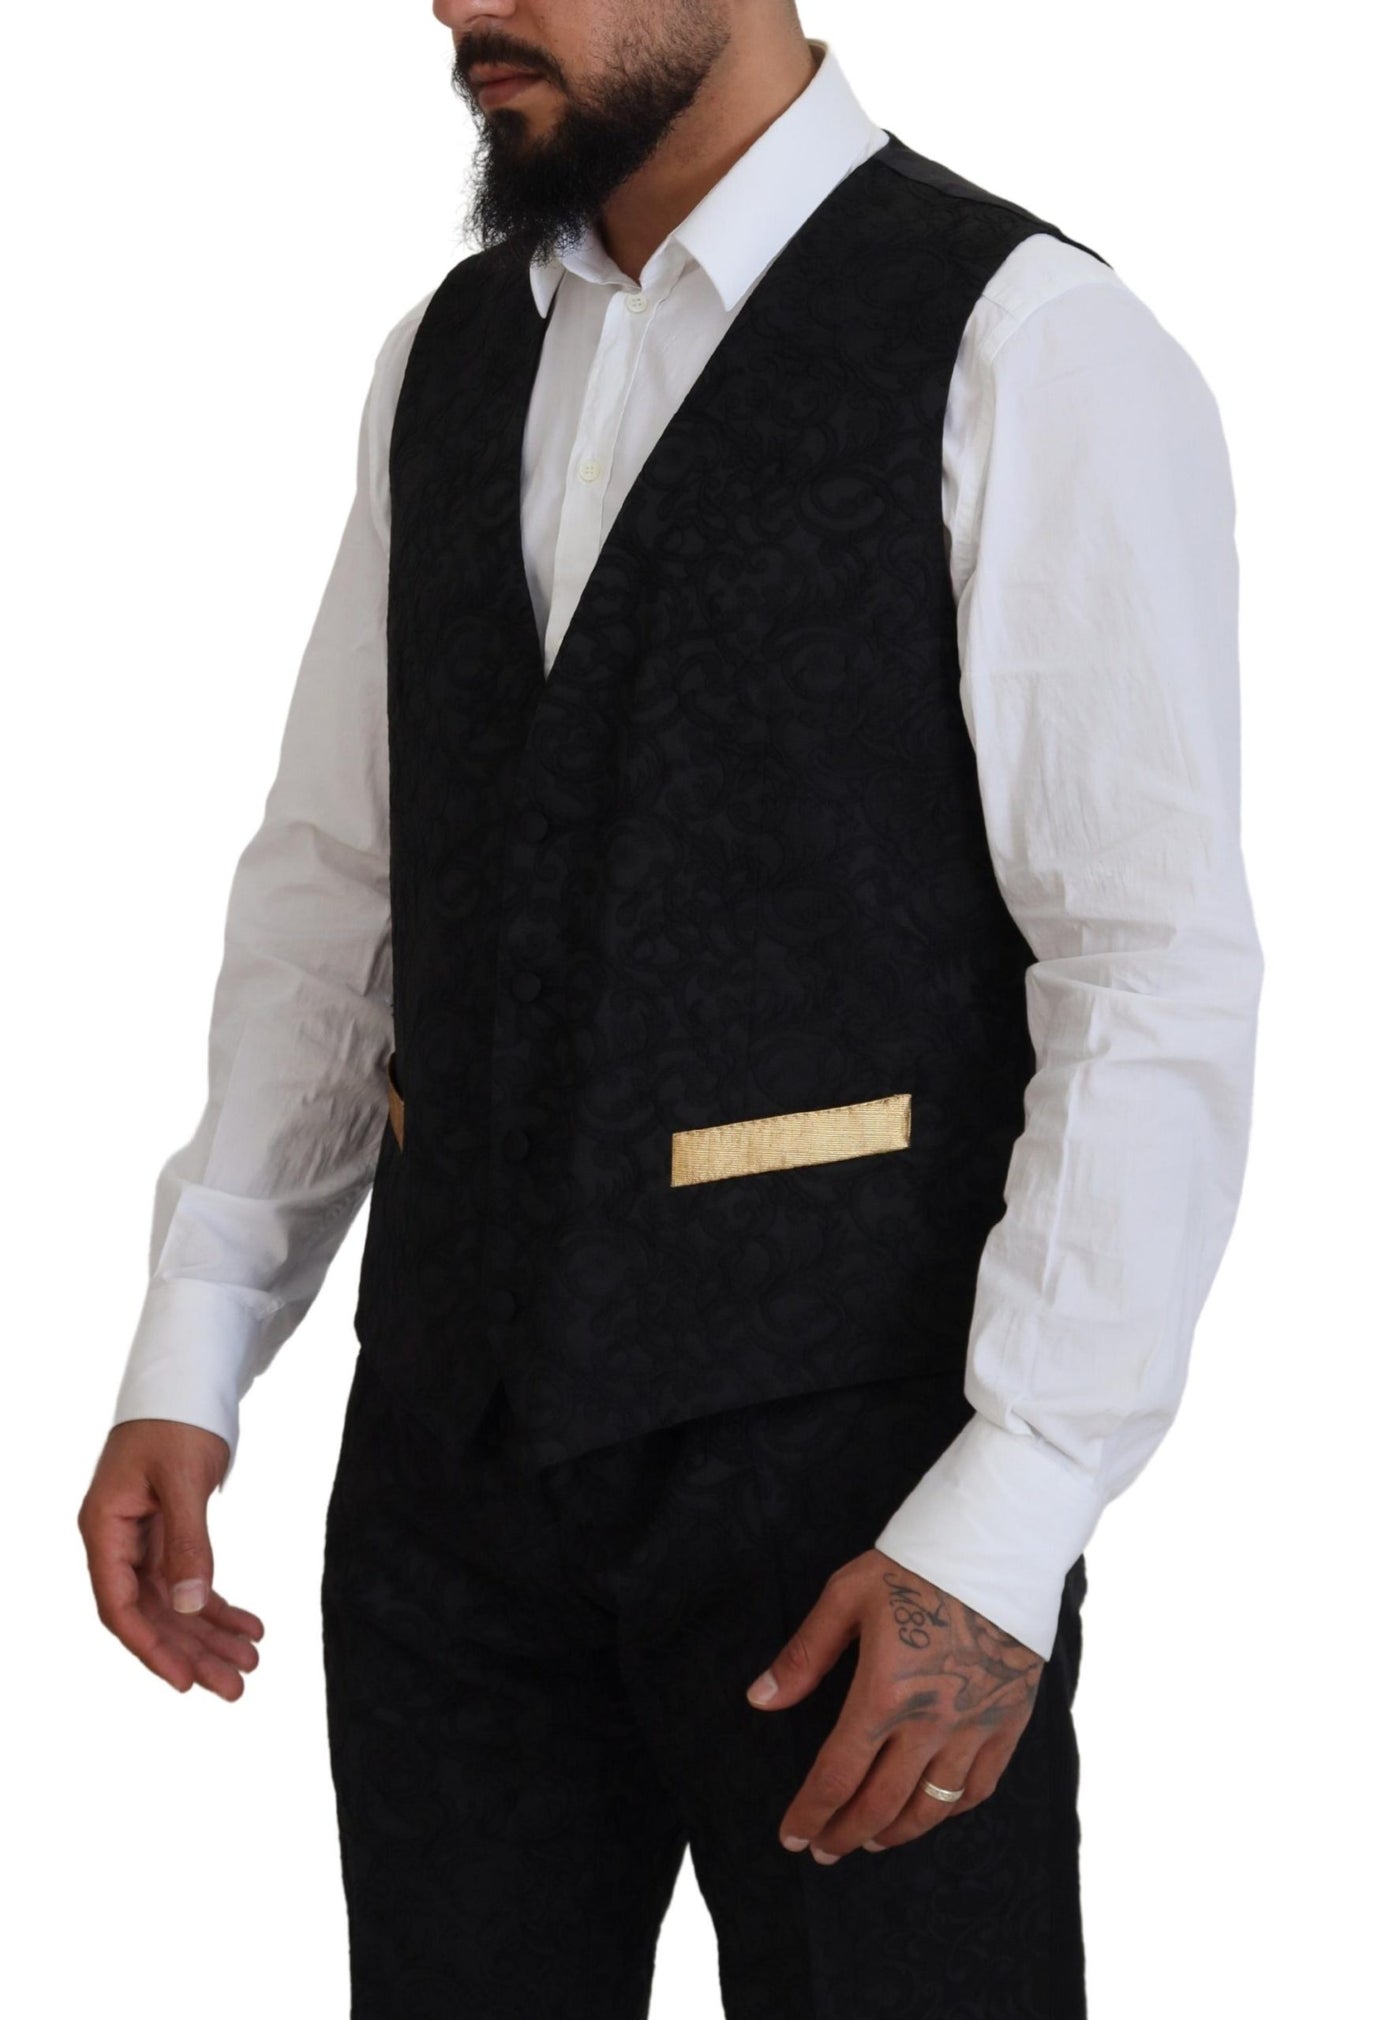 Dolce & Gabbana Black Gold Fantasy Tuxedo Slim Fit Suit